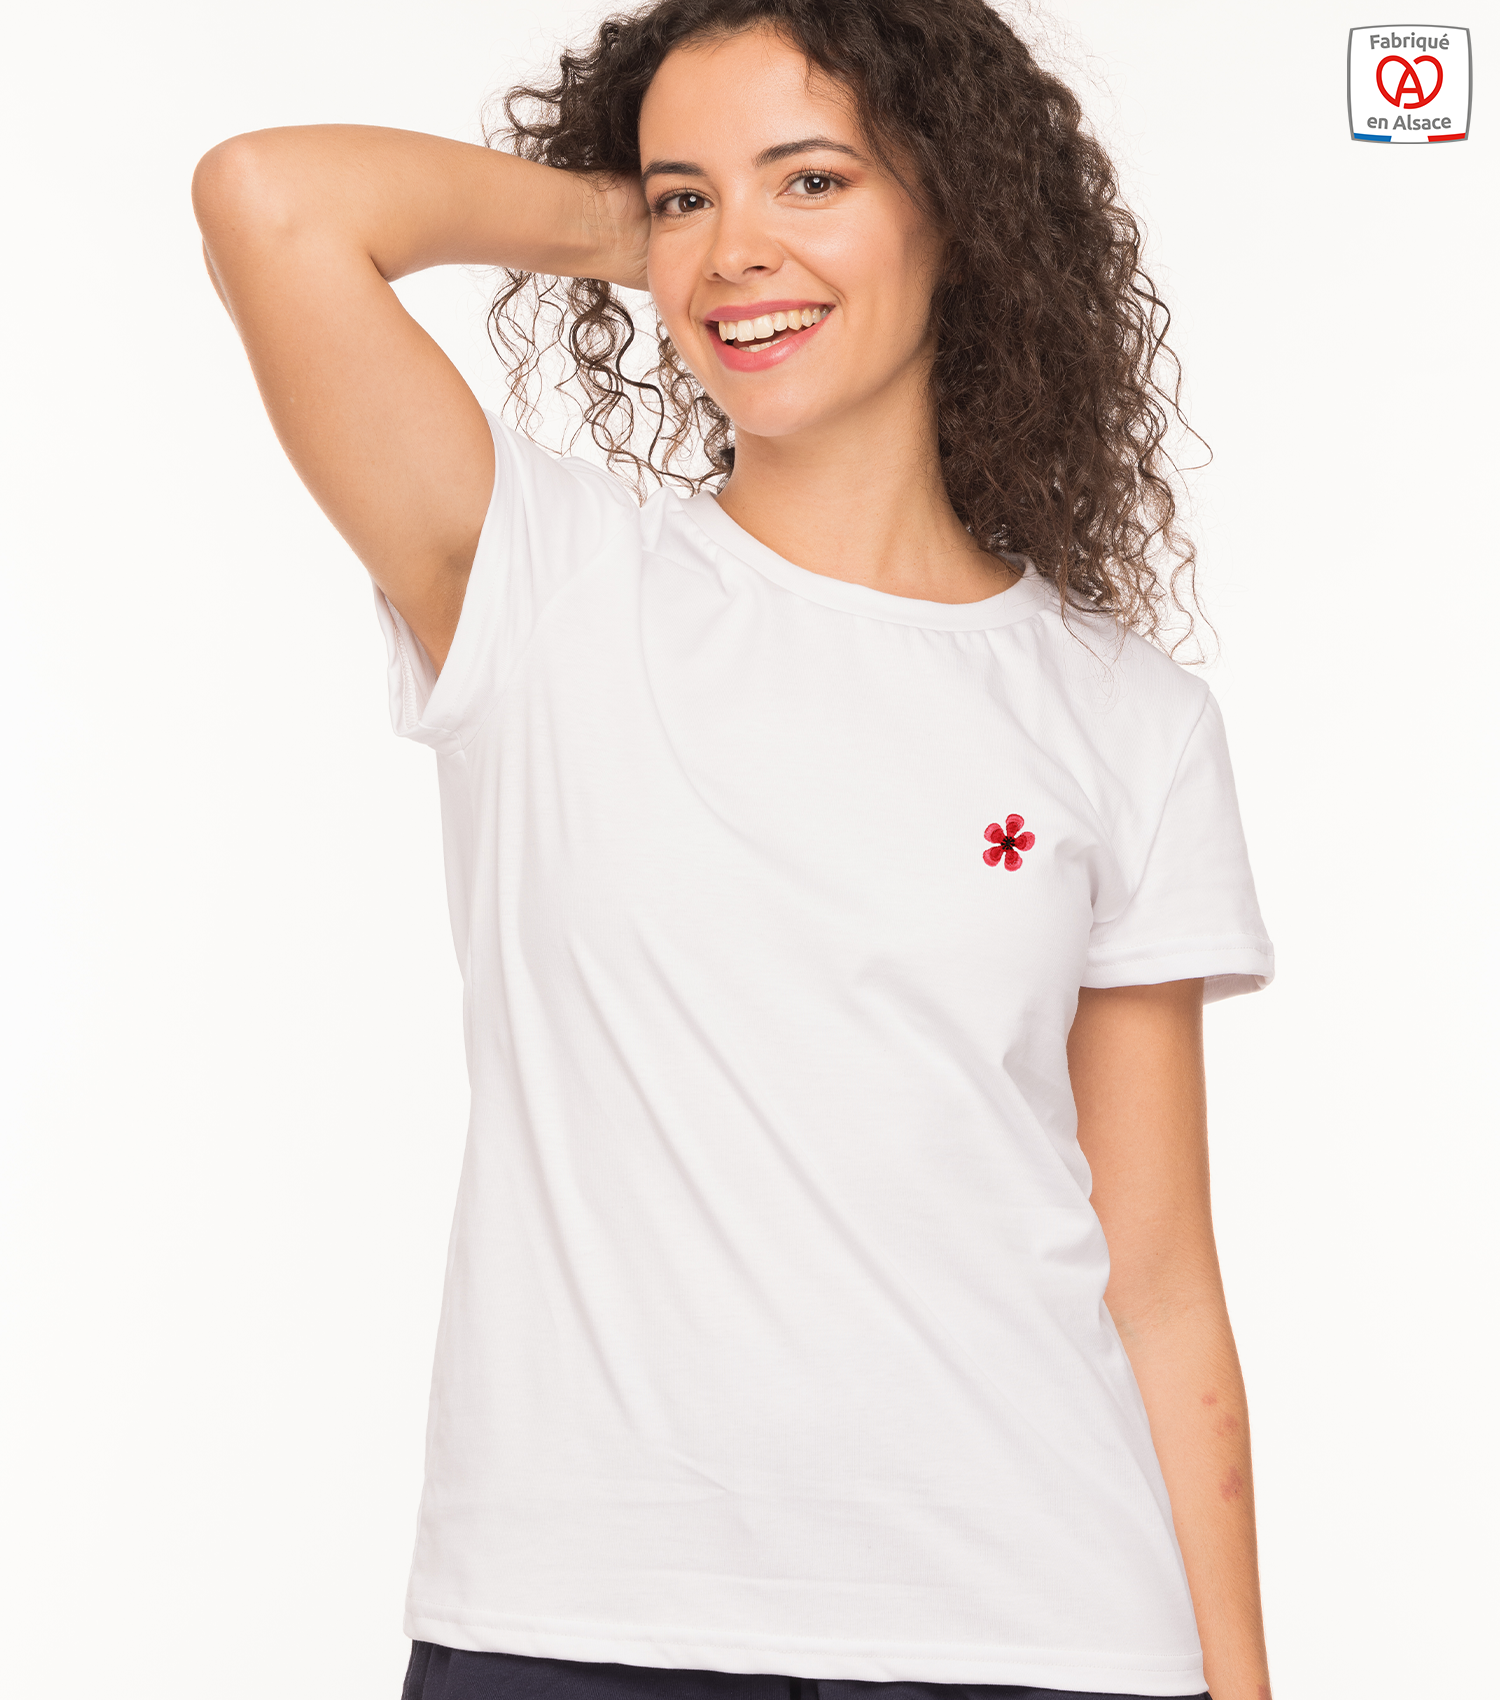 theim-t-shirt-femme-blanc-fleur-geranium-made-in-alsace-1500x1700px